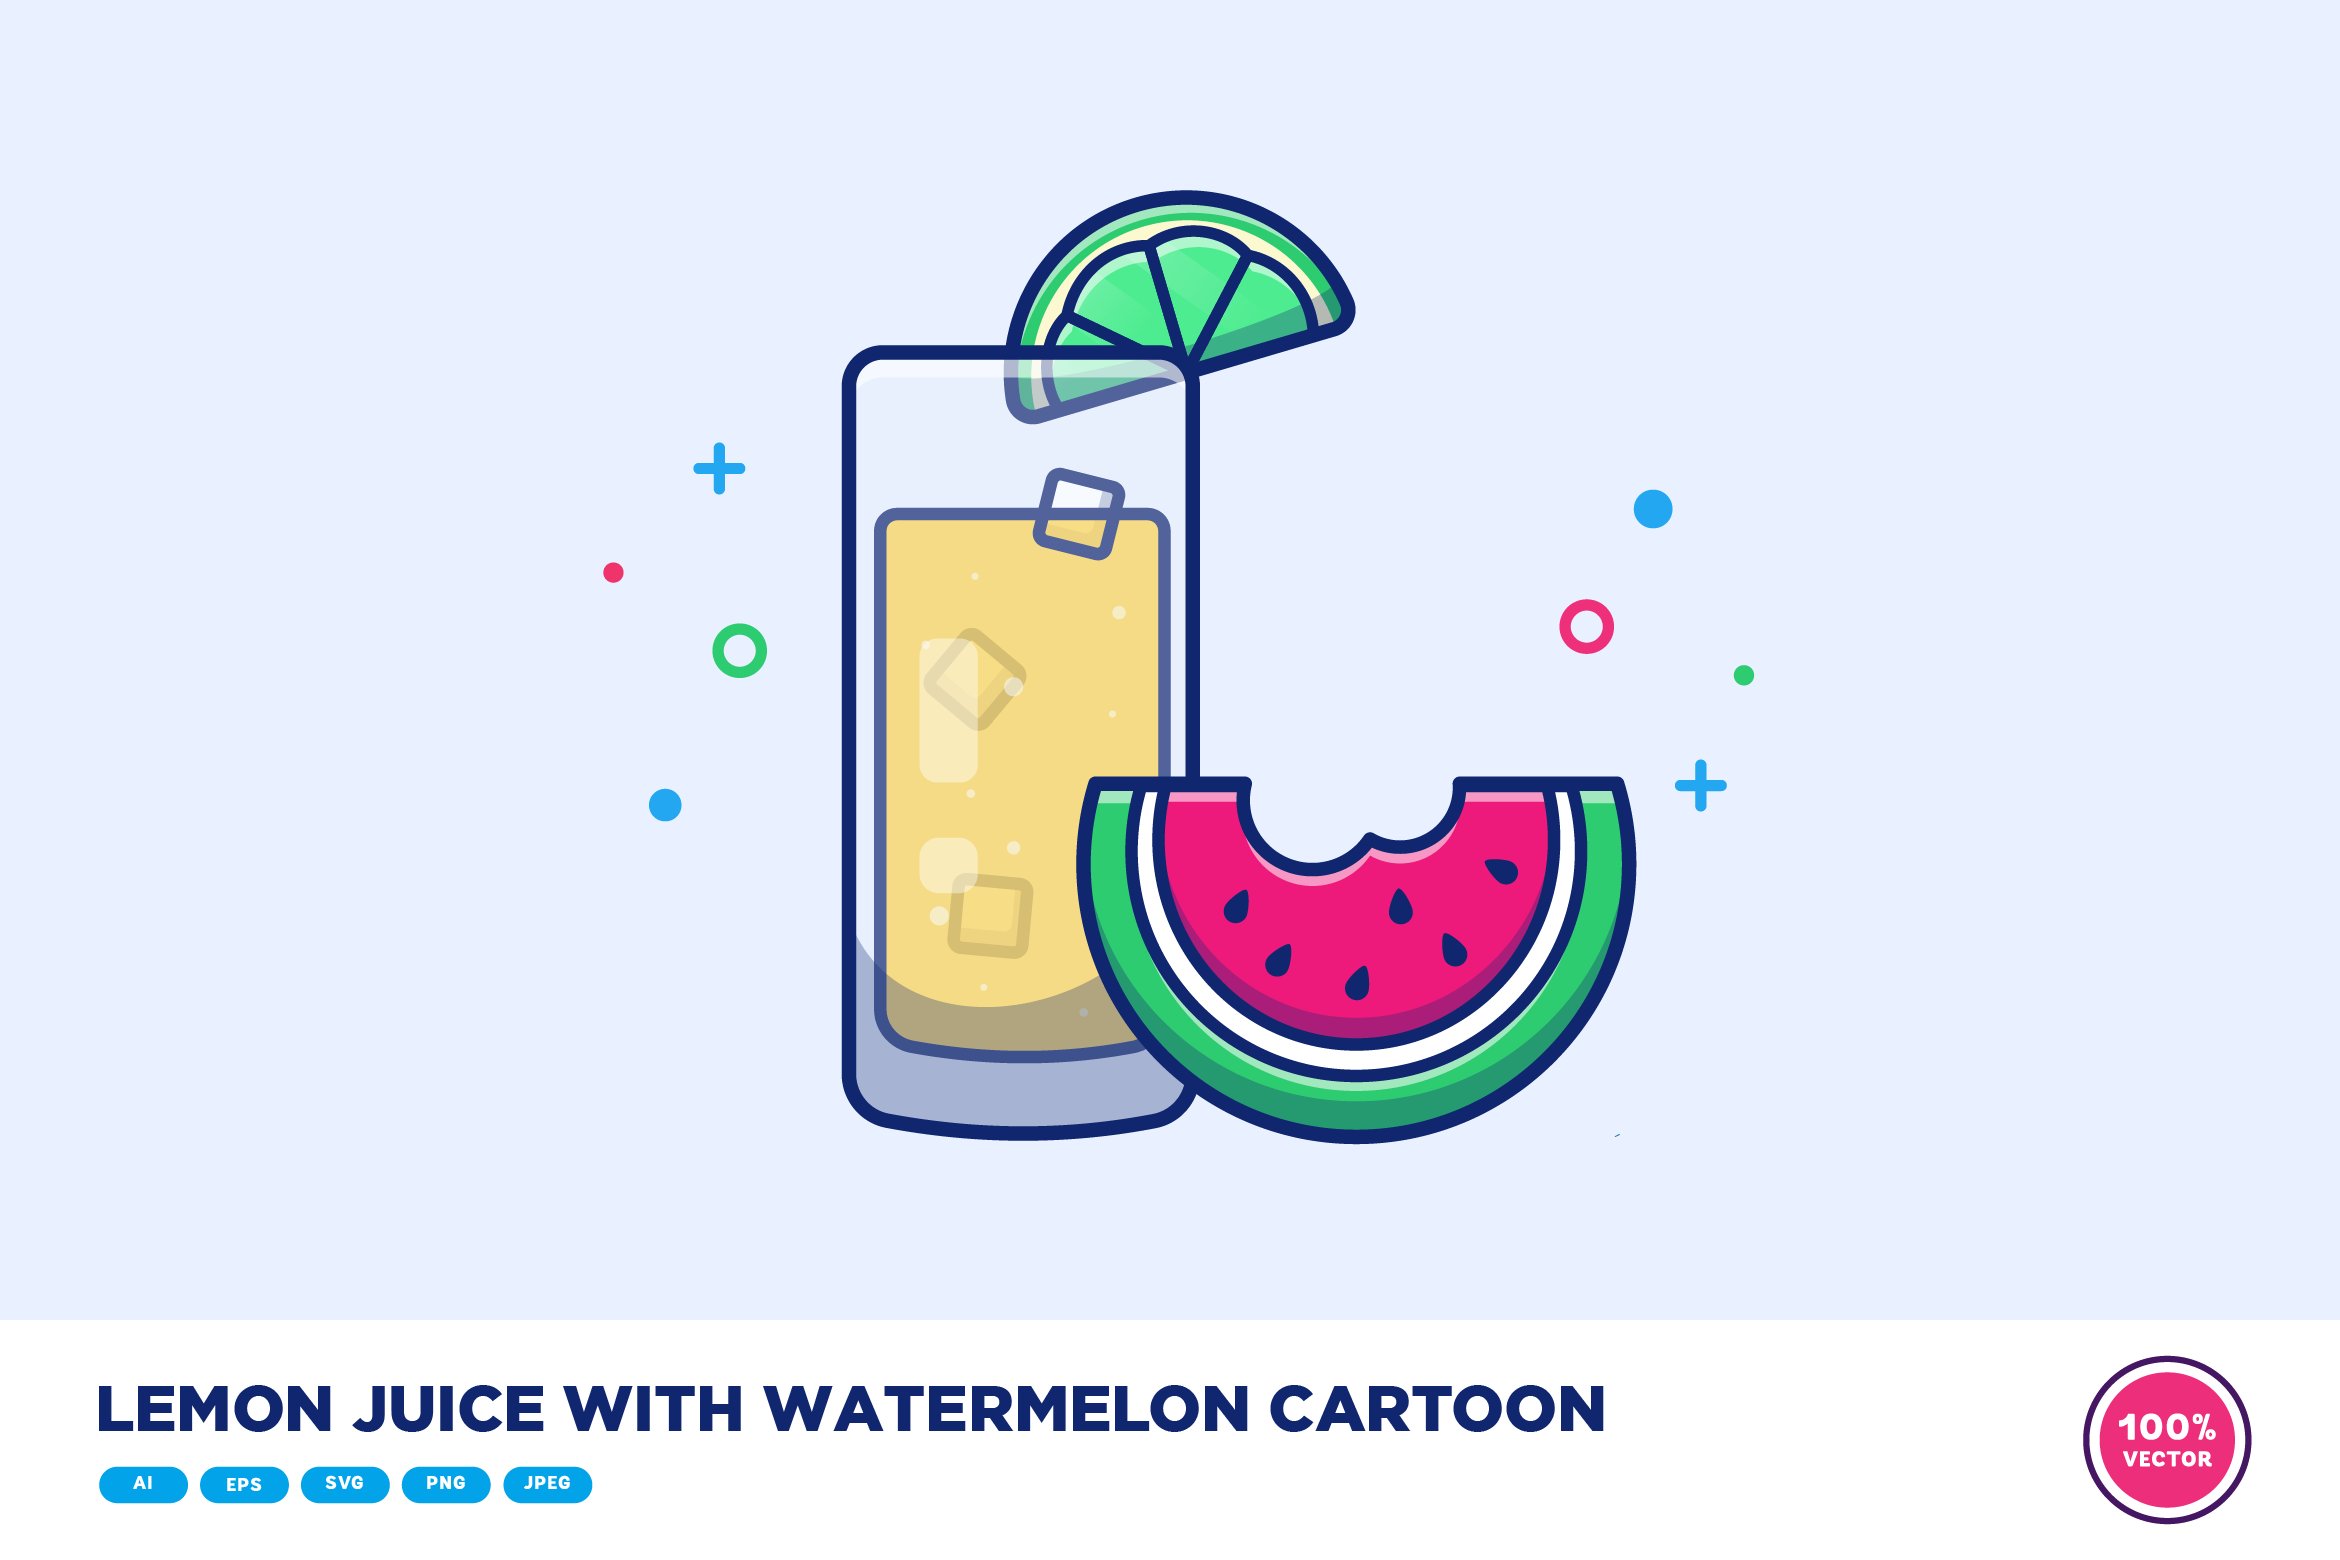 Lemon Juice With Watermelon Cartoon cover image.